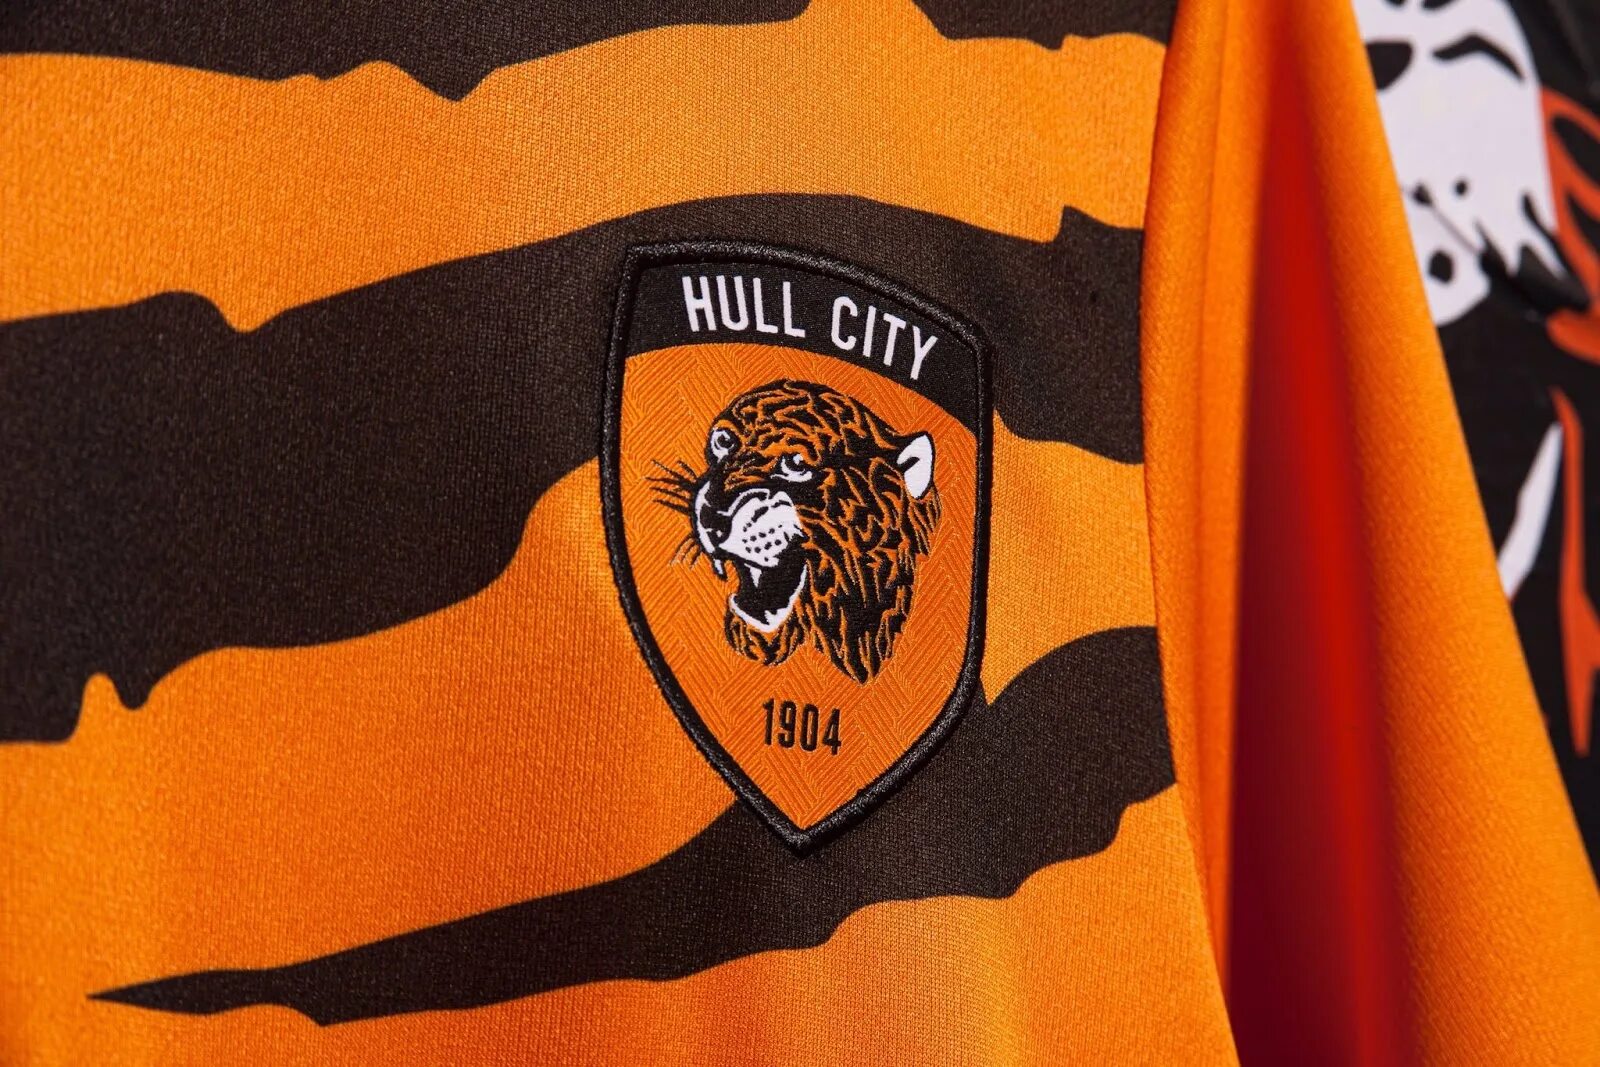 Hull city. Халл Сити. Hull City Home Kit 2022. Hull City FC. Халл Сити форма 2019.